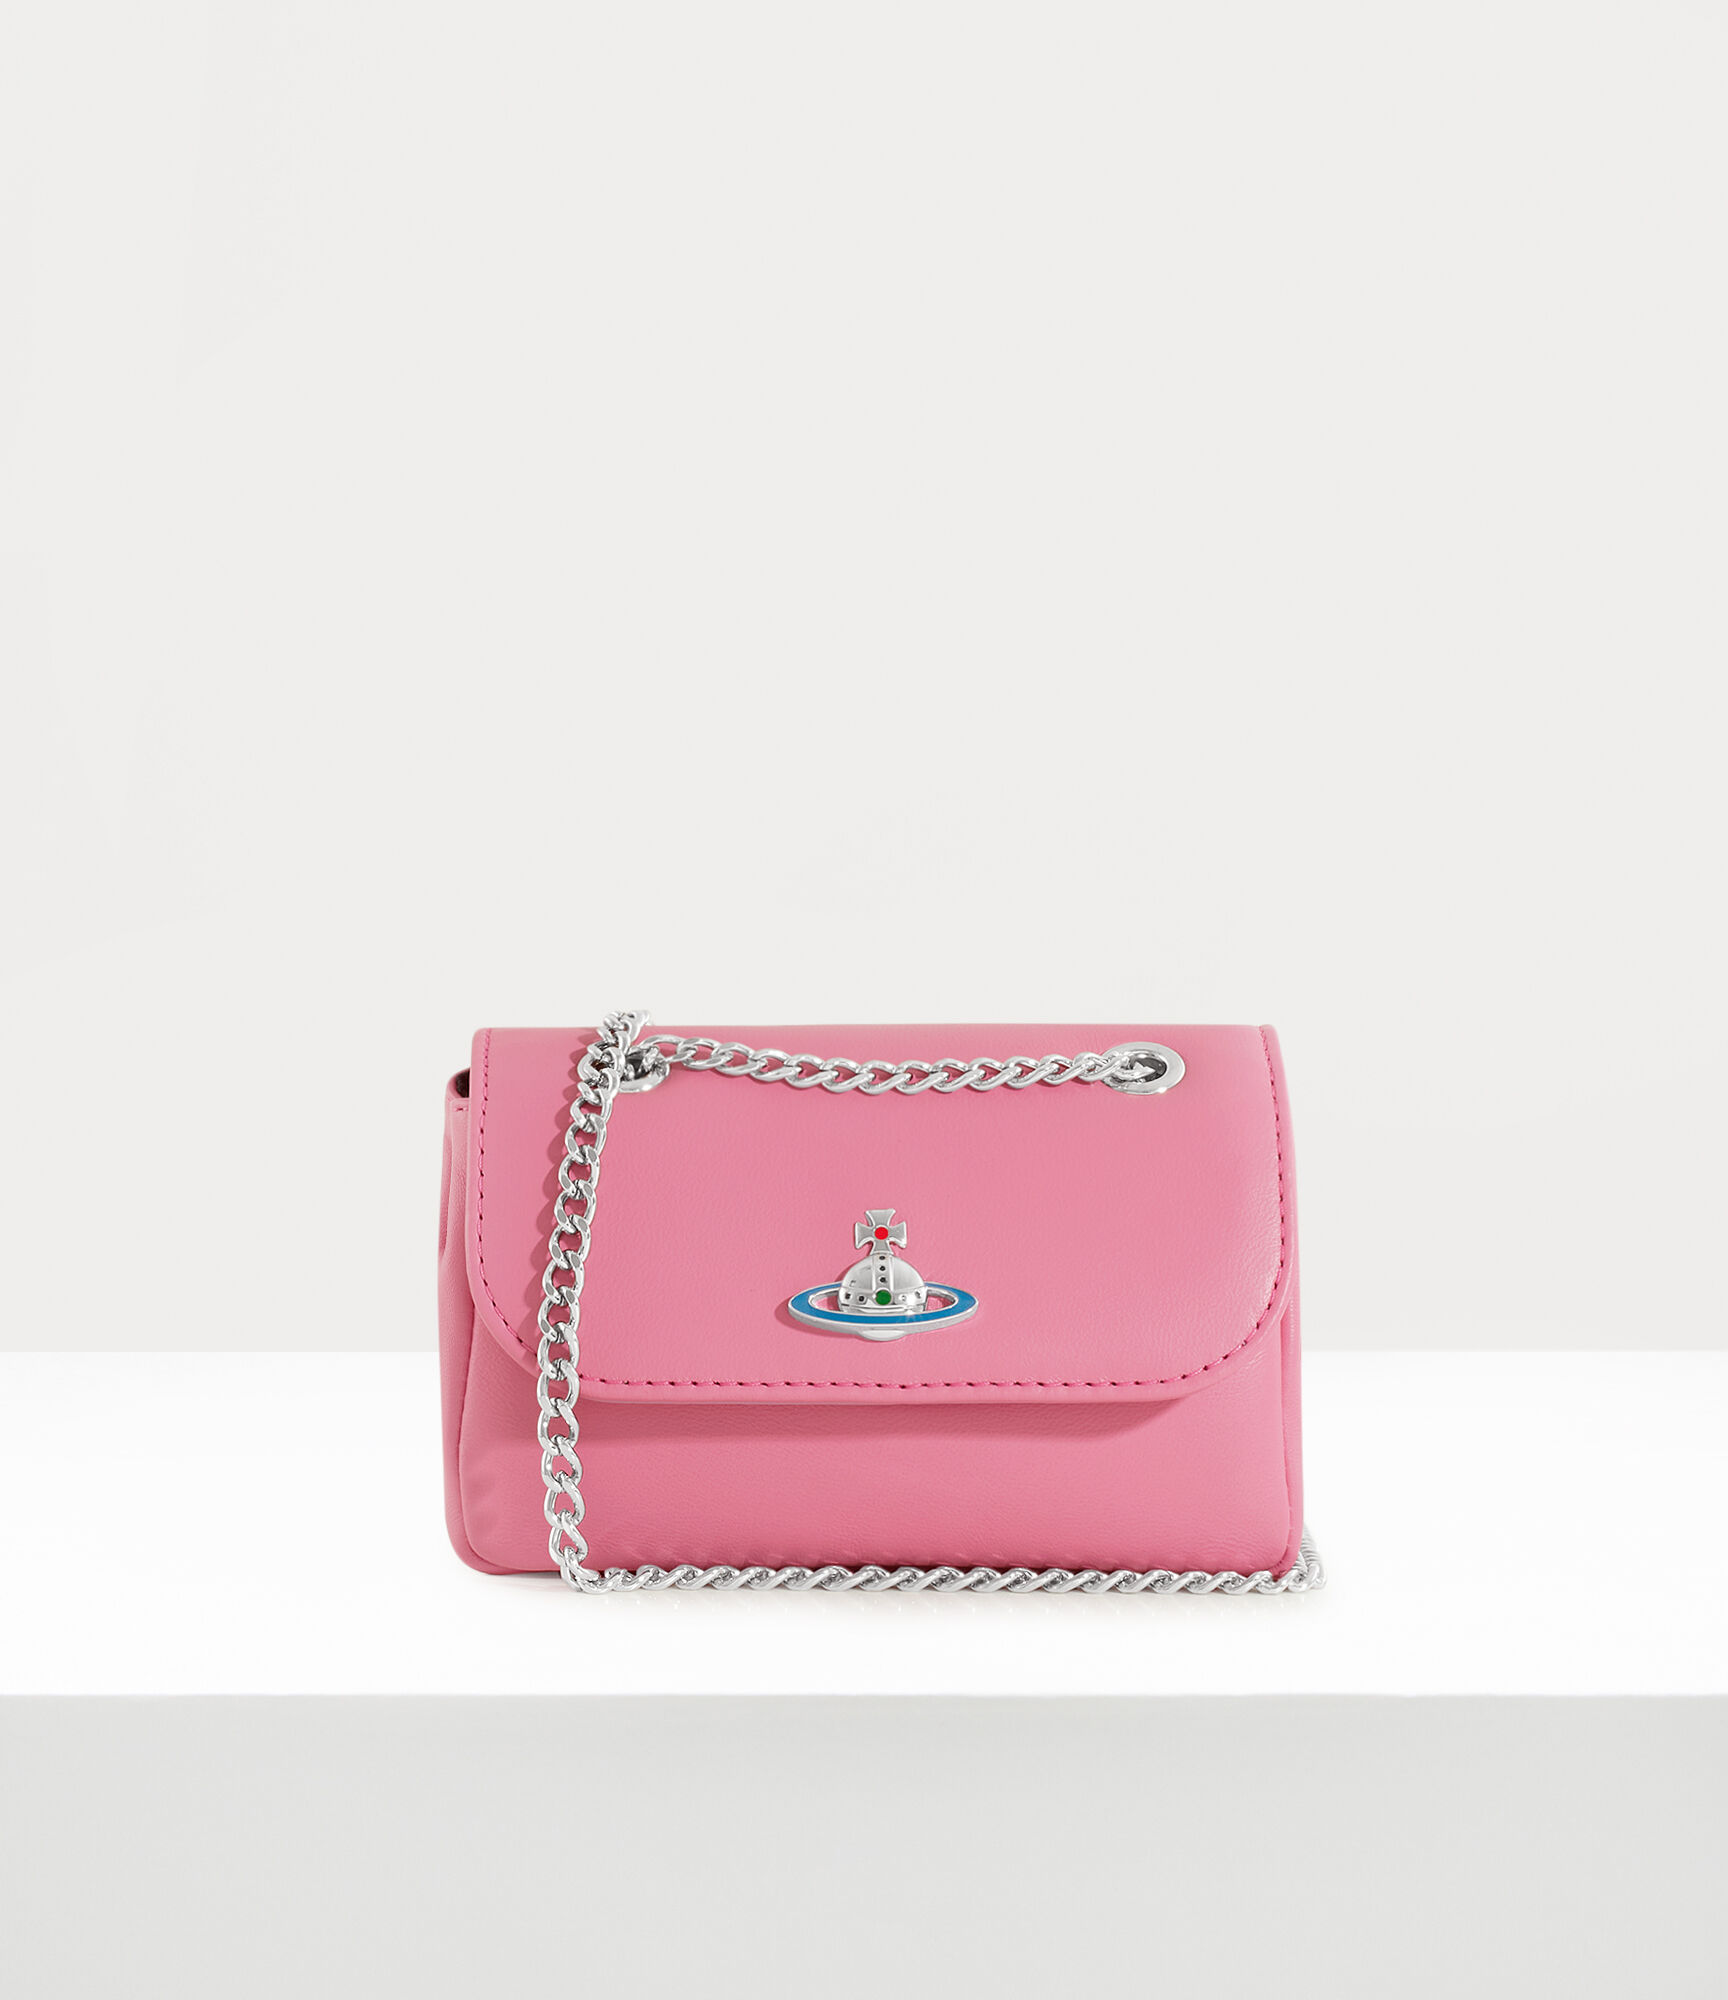 Designer Luxury Bags Handbag Fashion Replica Single Shoulder Bag Classic  Casual Crossbody Bags From Lucky82, $5.85 | DHgate.Com